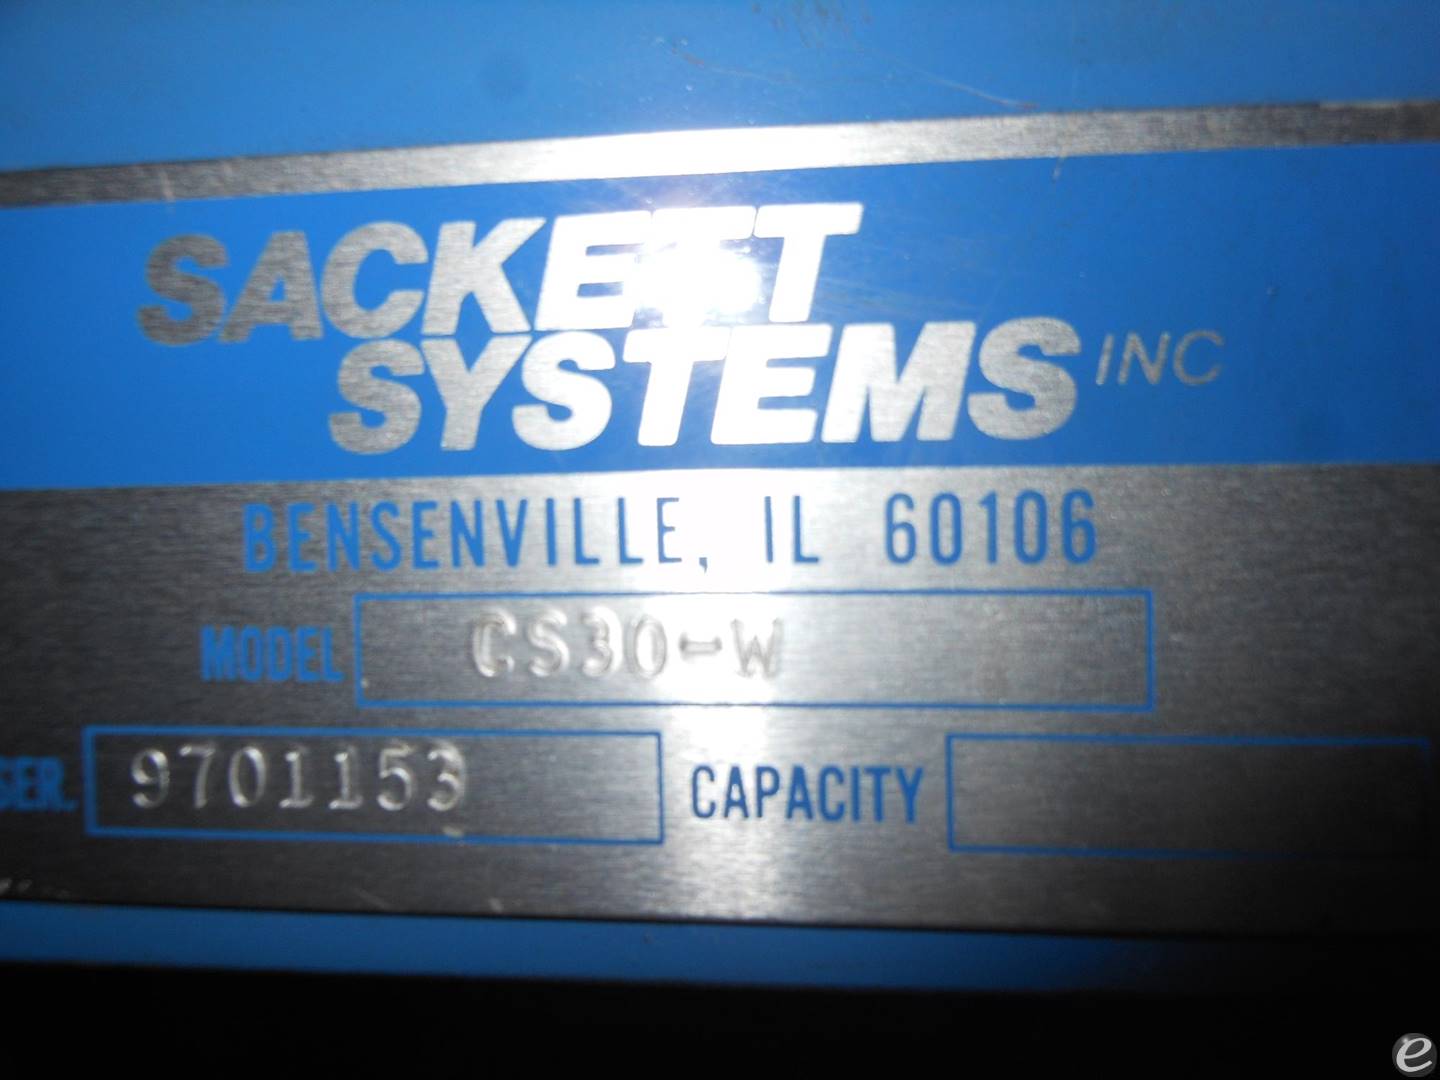 Sackett Systems CS30-W